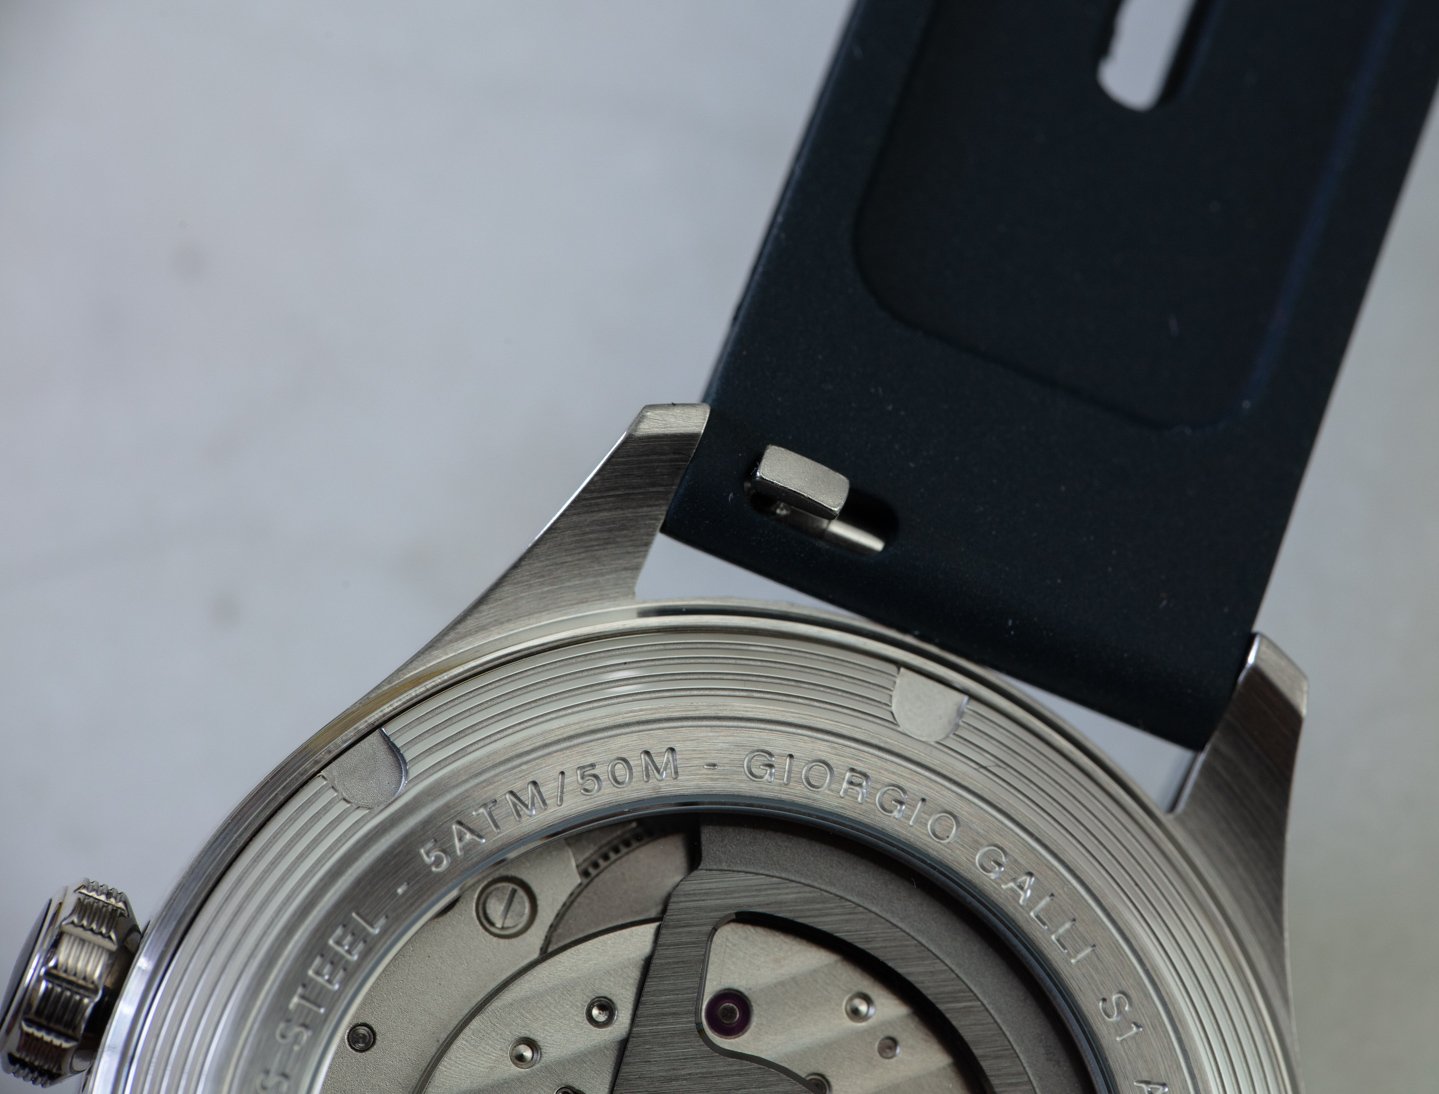 Наручные автоматические часы: Timex Giorgio Galli S1 38